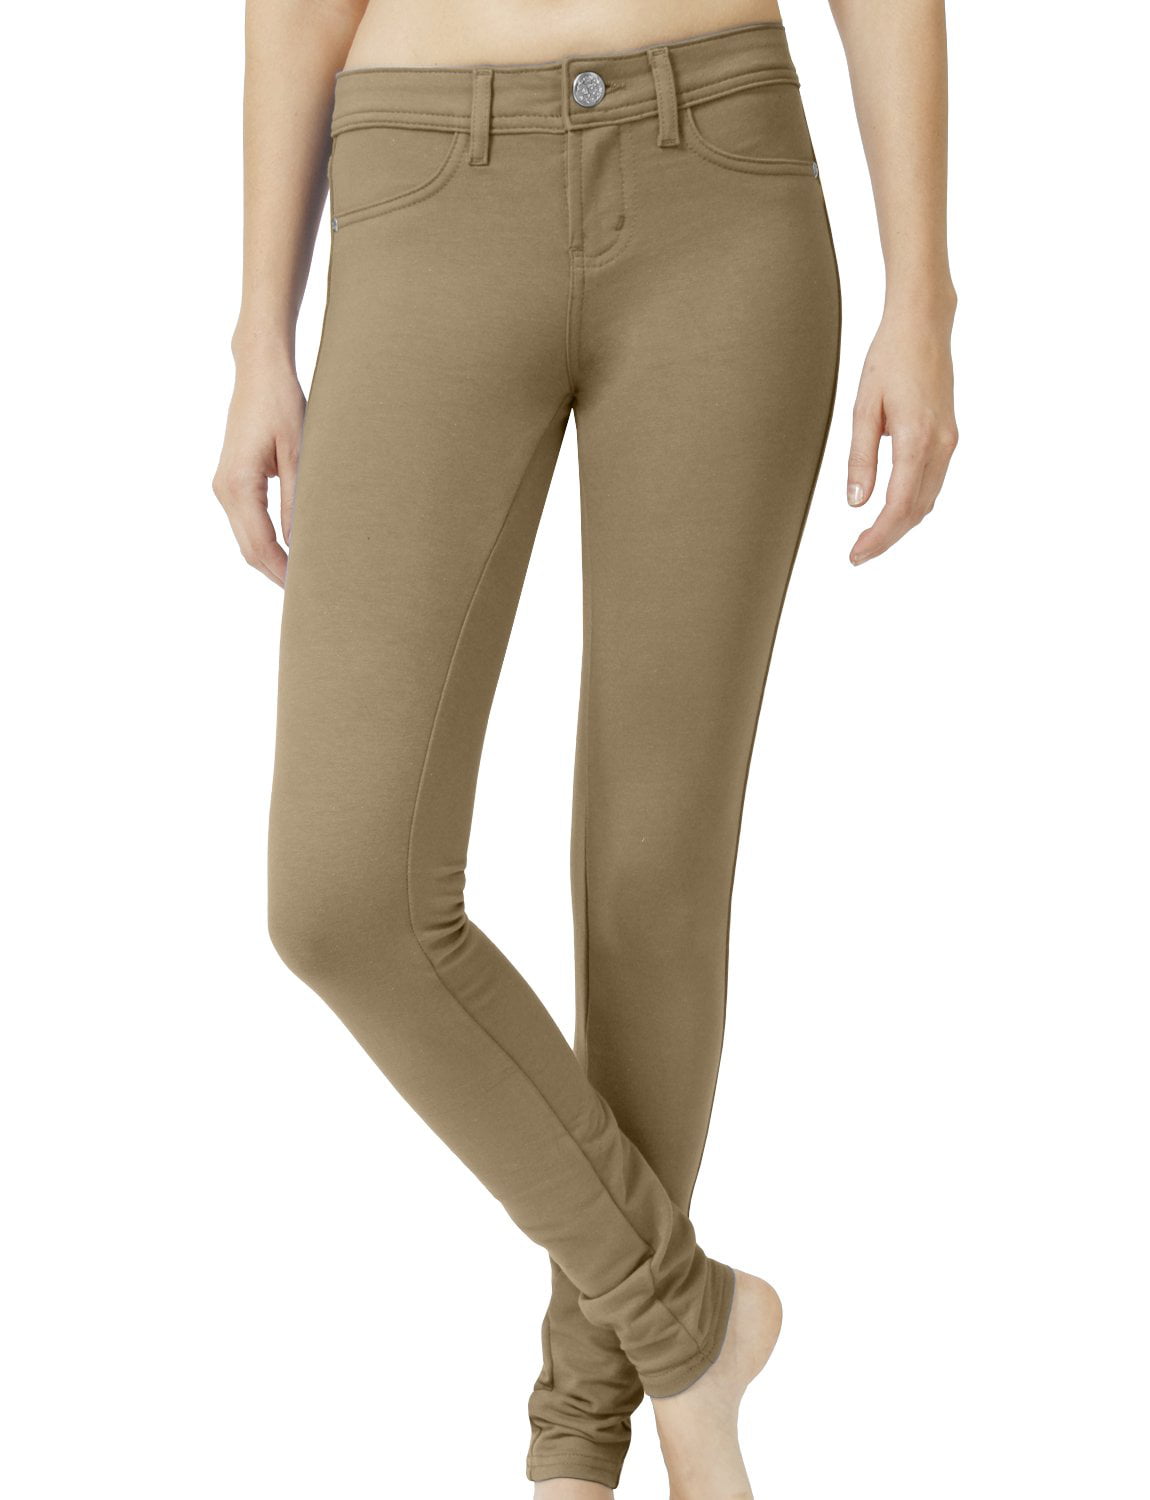 J. METHOD Women's Skinny Pants Soft Everyday Solid Color Basic Slim Tight  Fit Stretch Legging Jeggings Jeans NEWP77 Dark Purple 3X